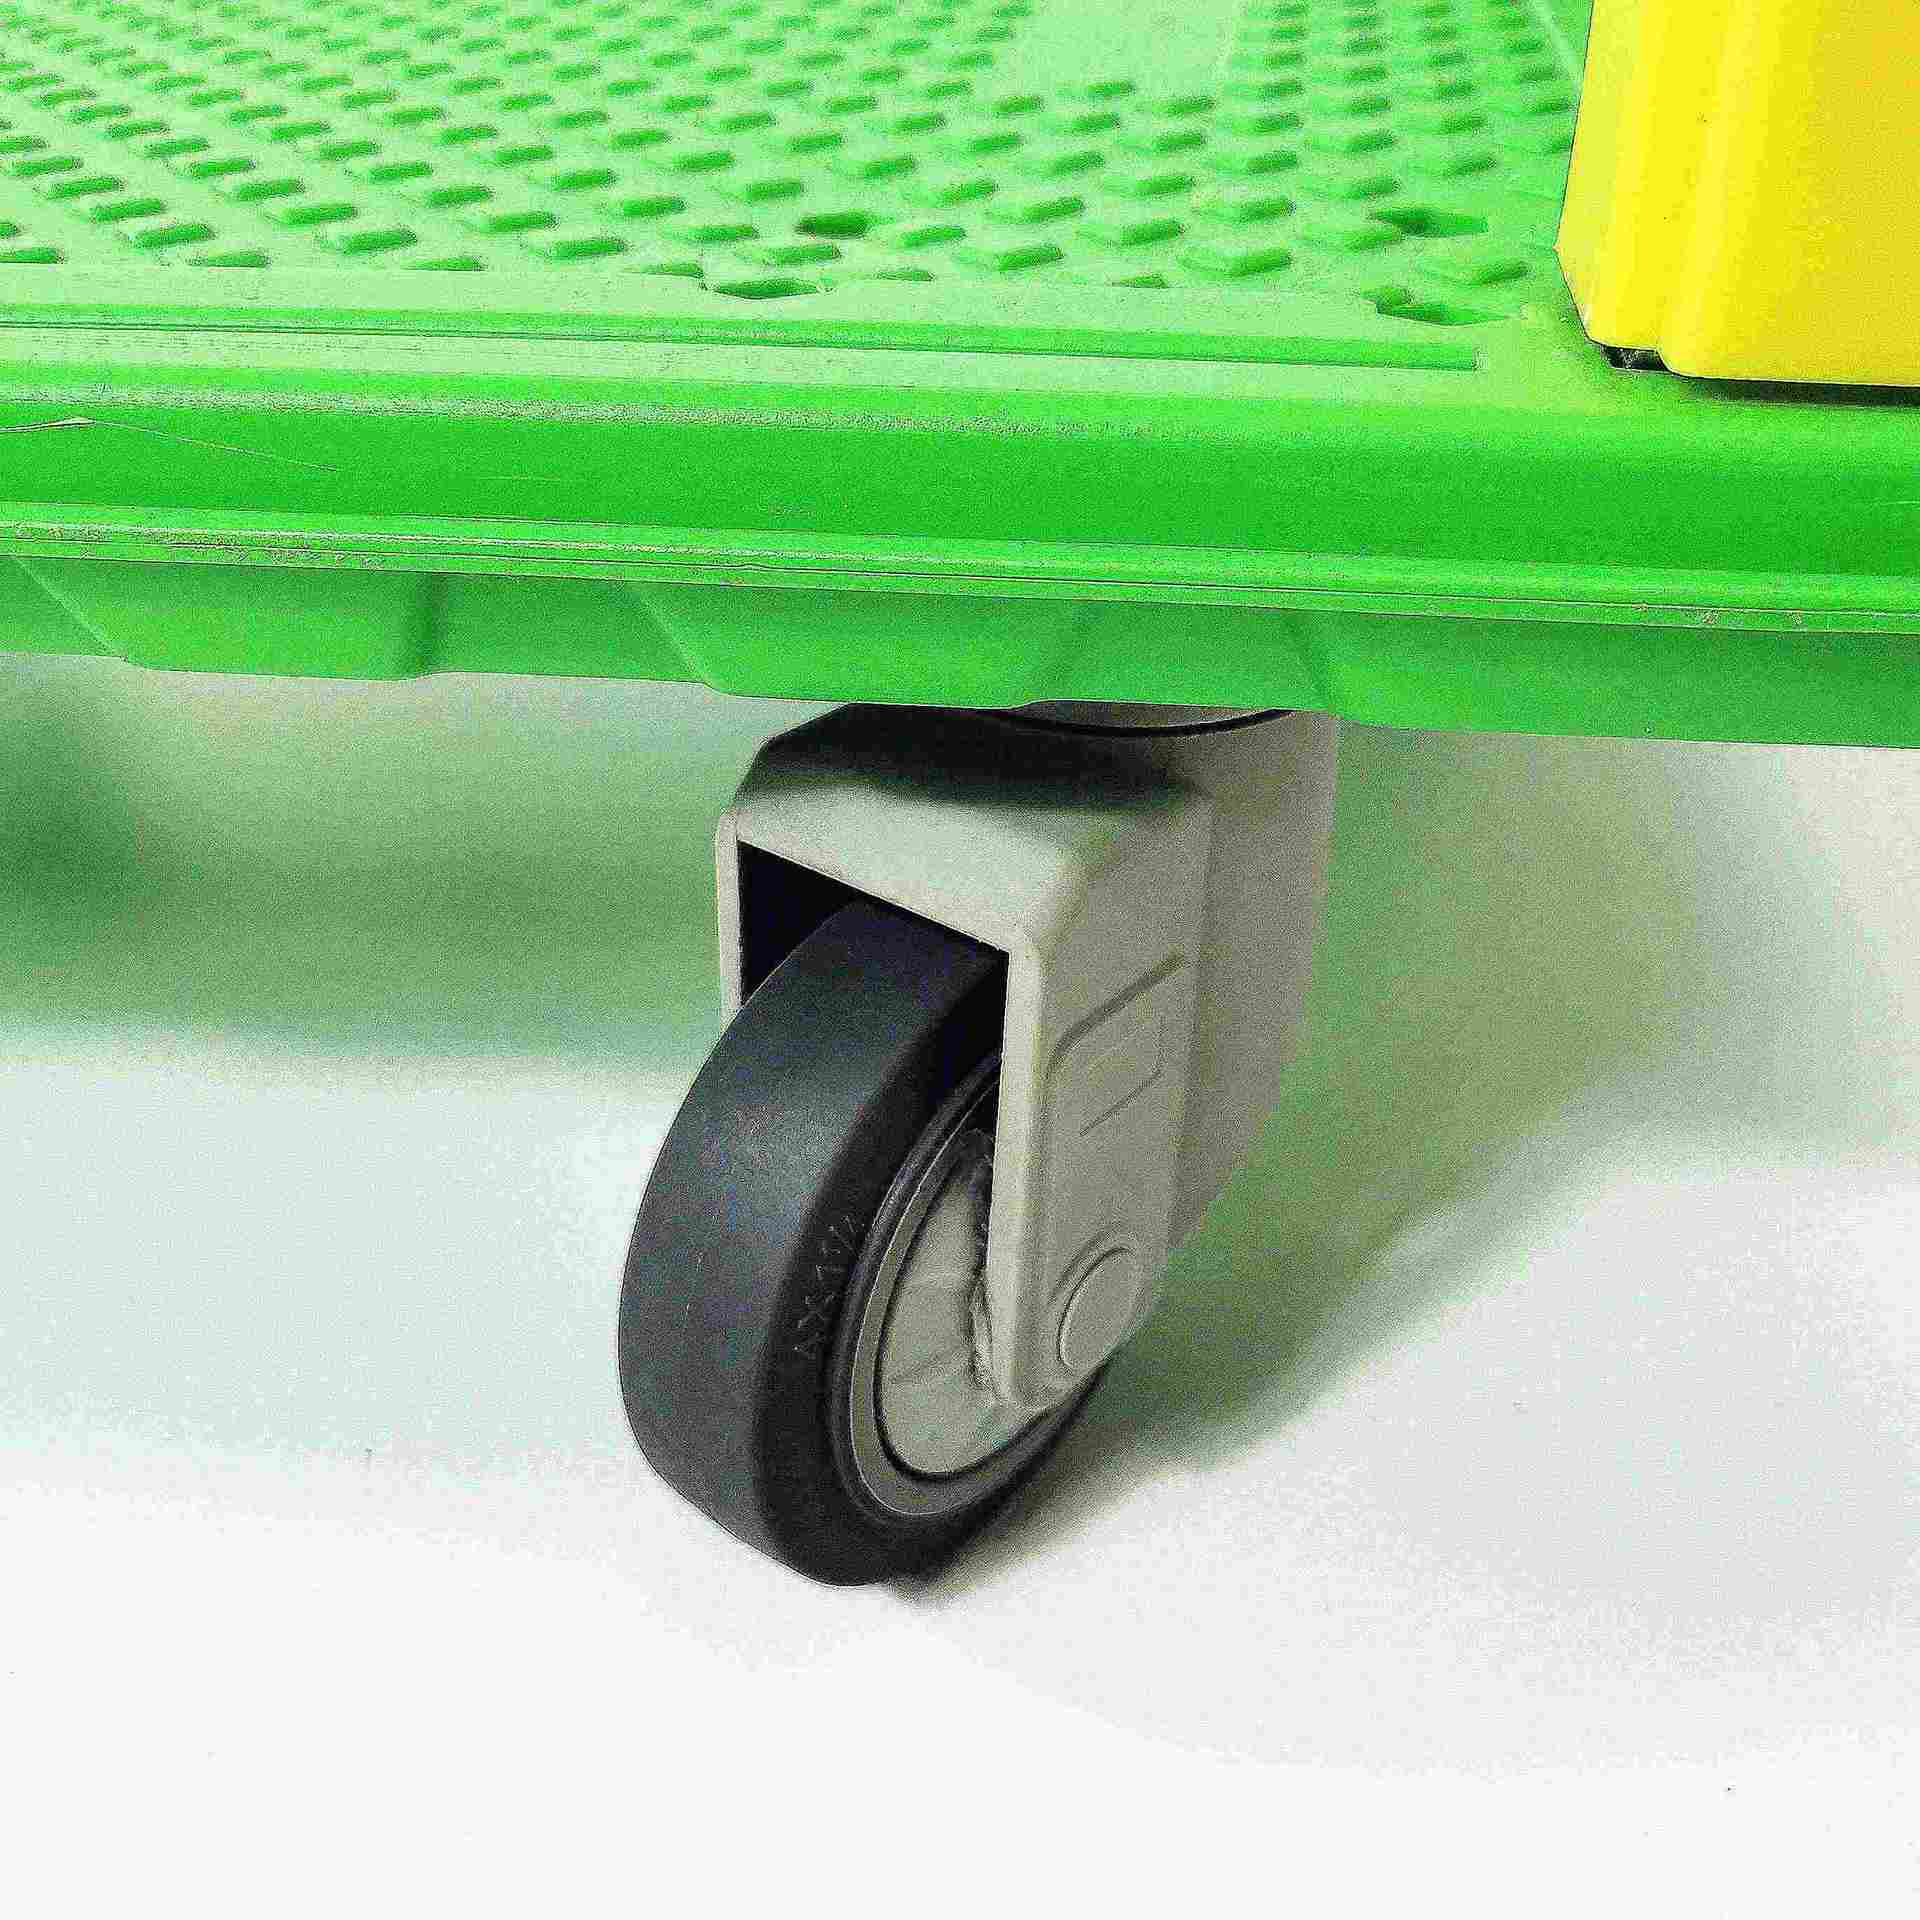 Durable Push Hand Trolley with 4 TPR Swivel Bearing Plastic Wheels 660 Lbs Capacity Green Folding Platform Truck Flatbed Cart